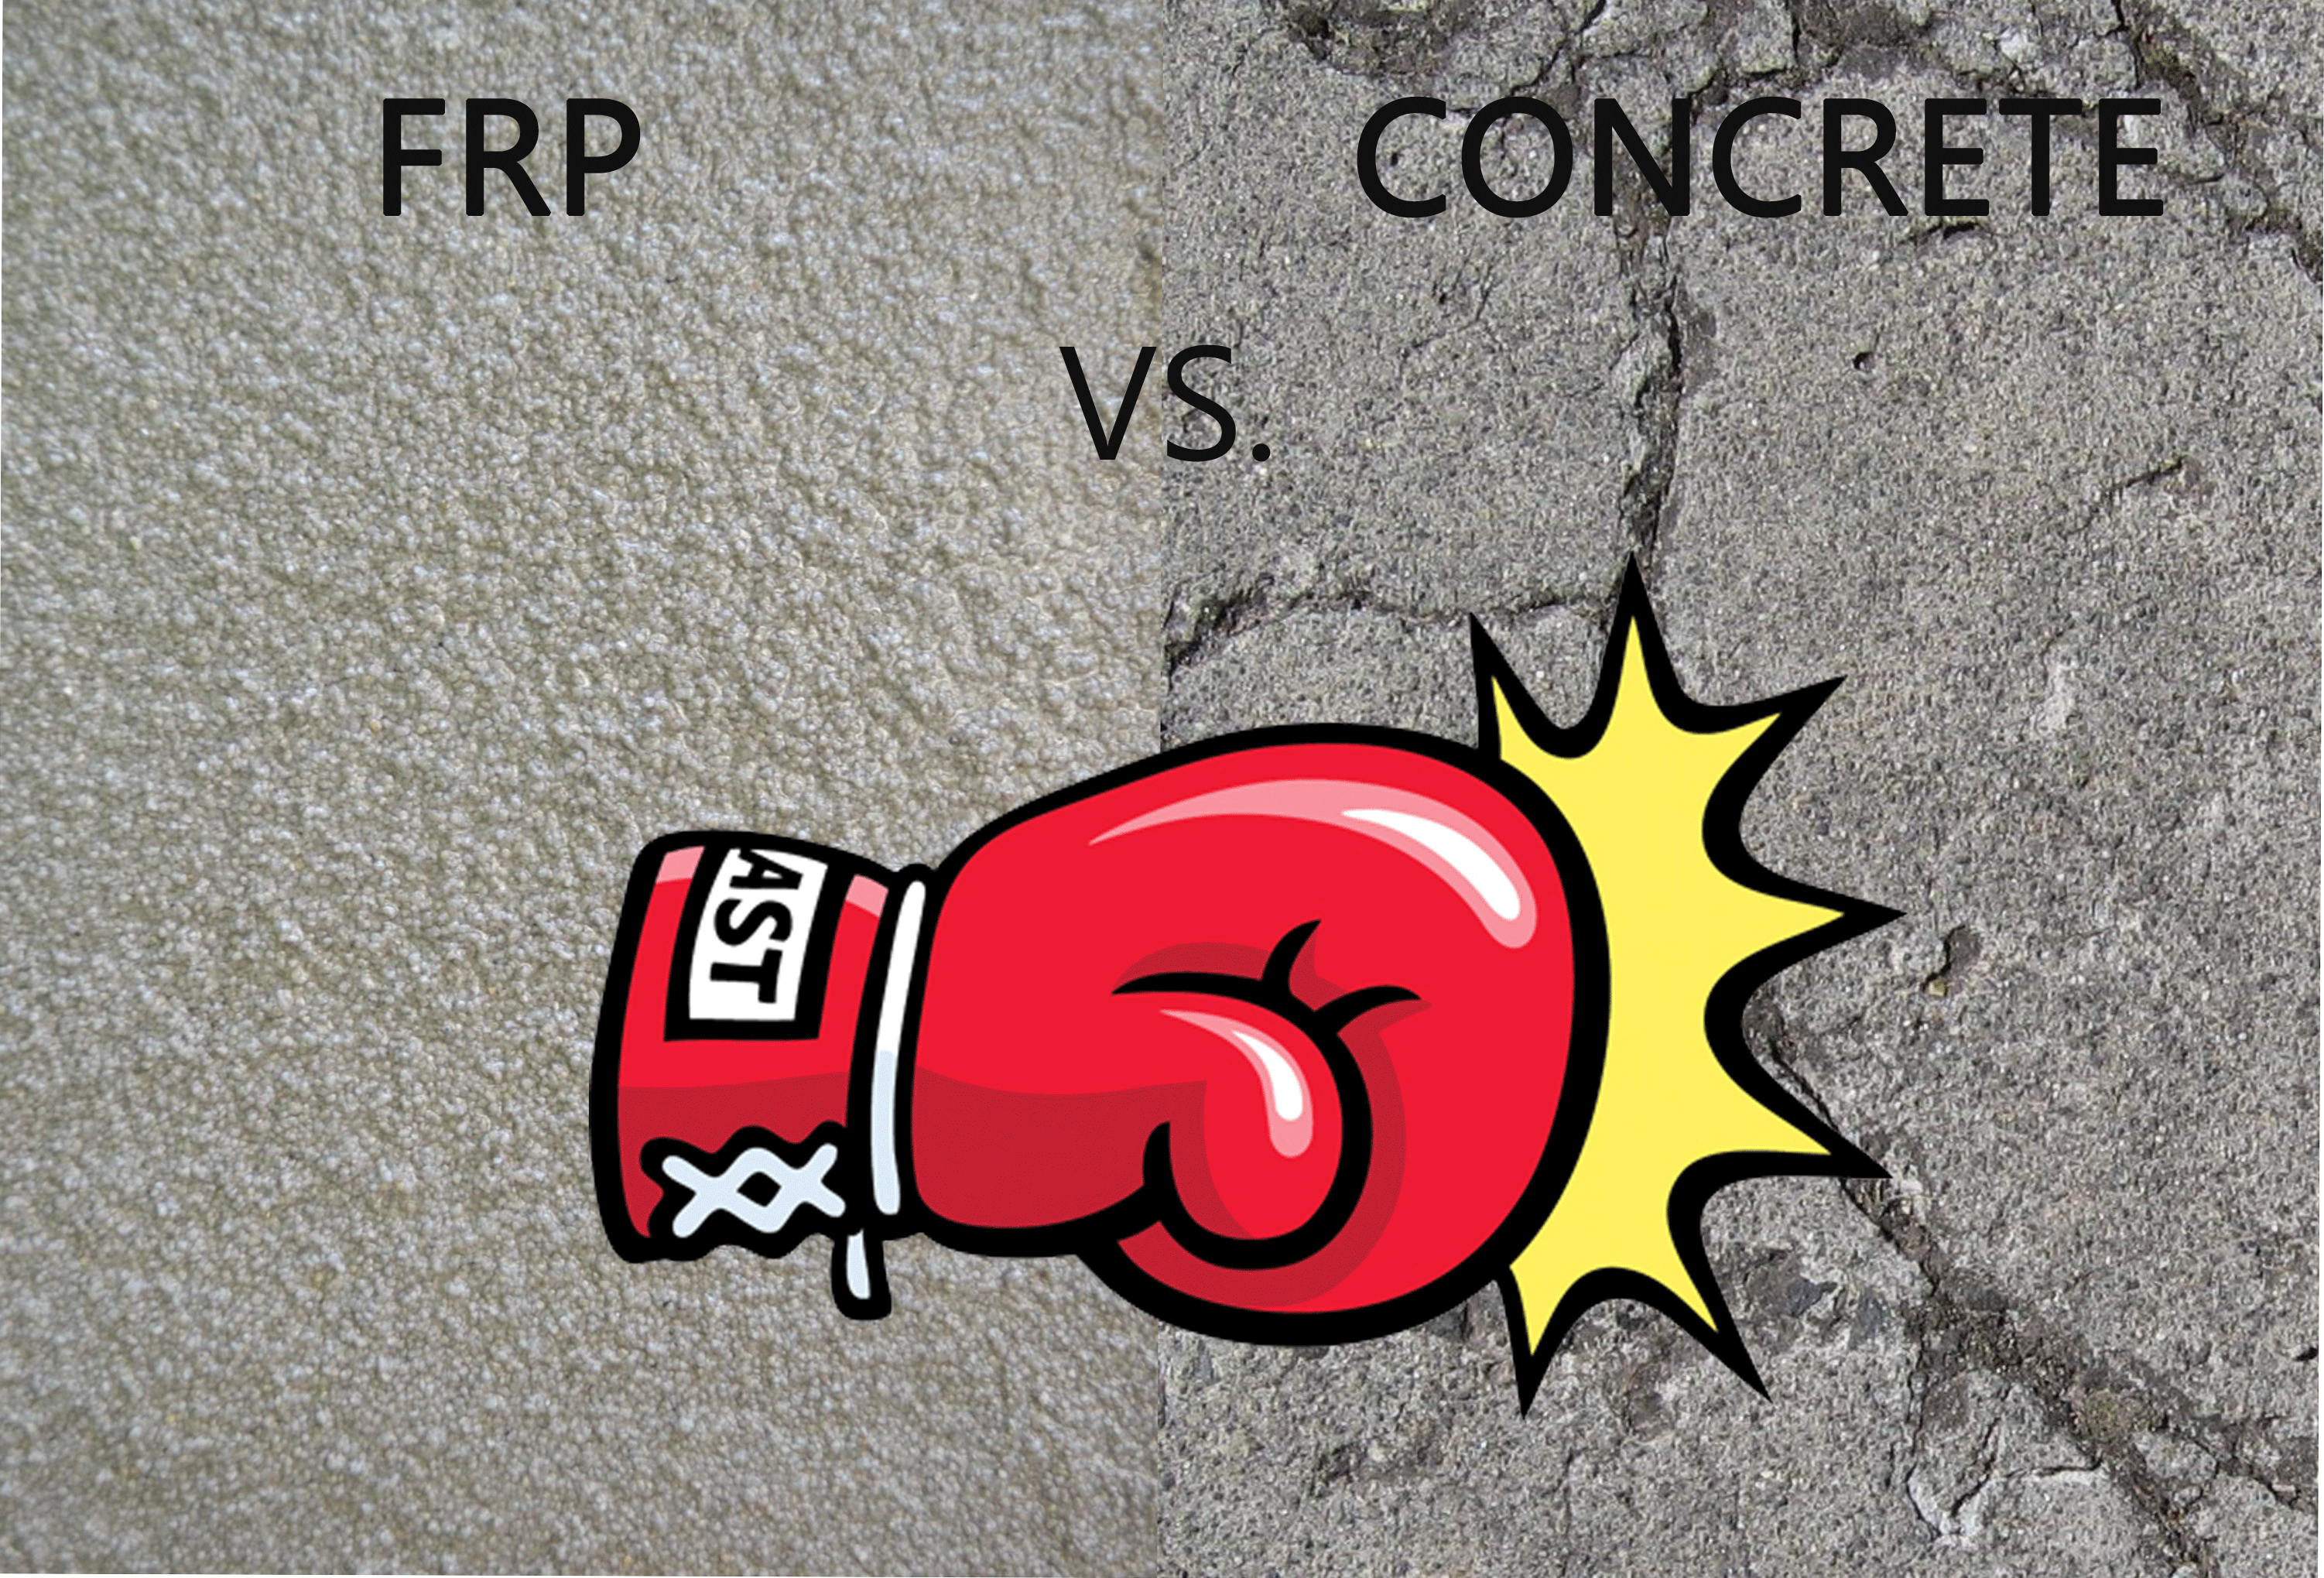 In The Center Ring: FRP vs. Concrete